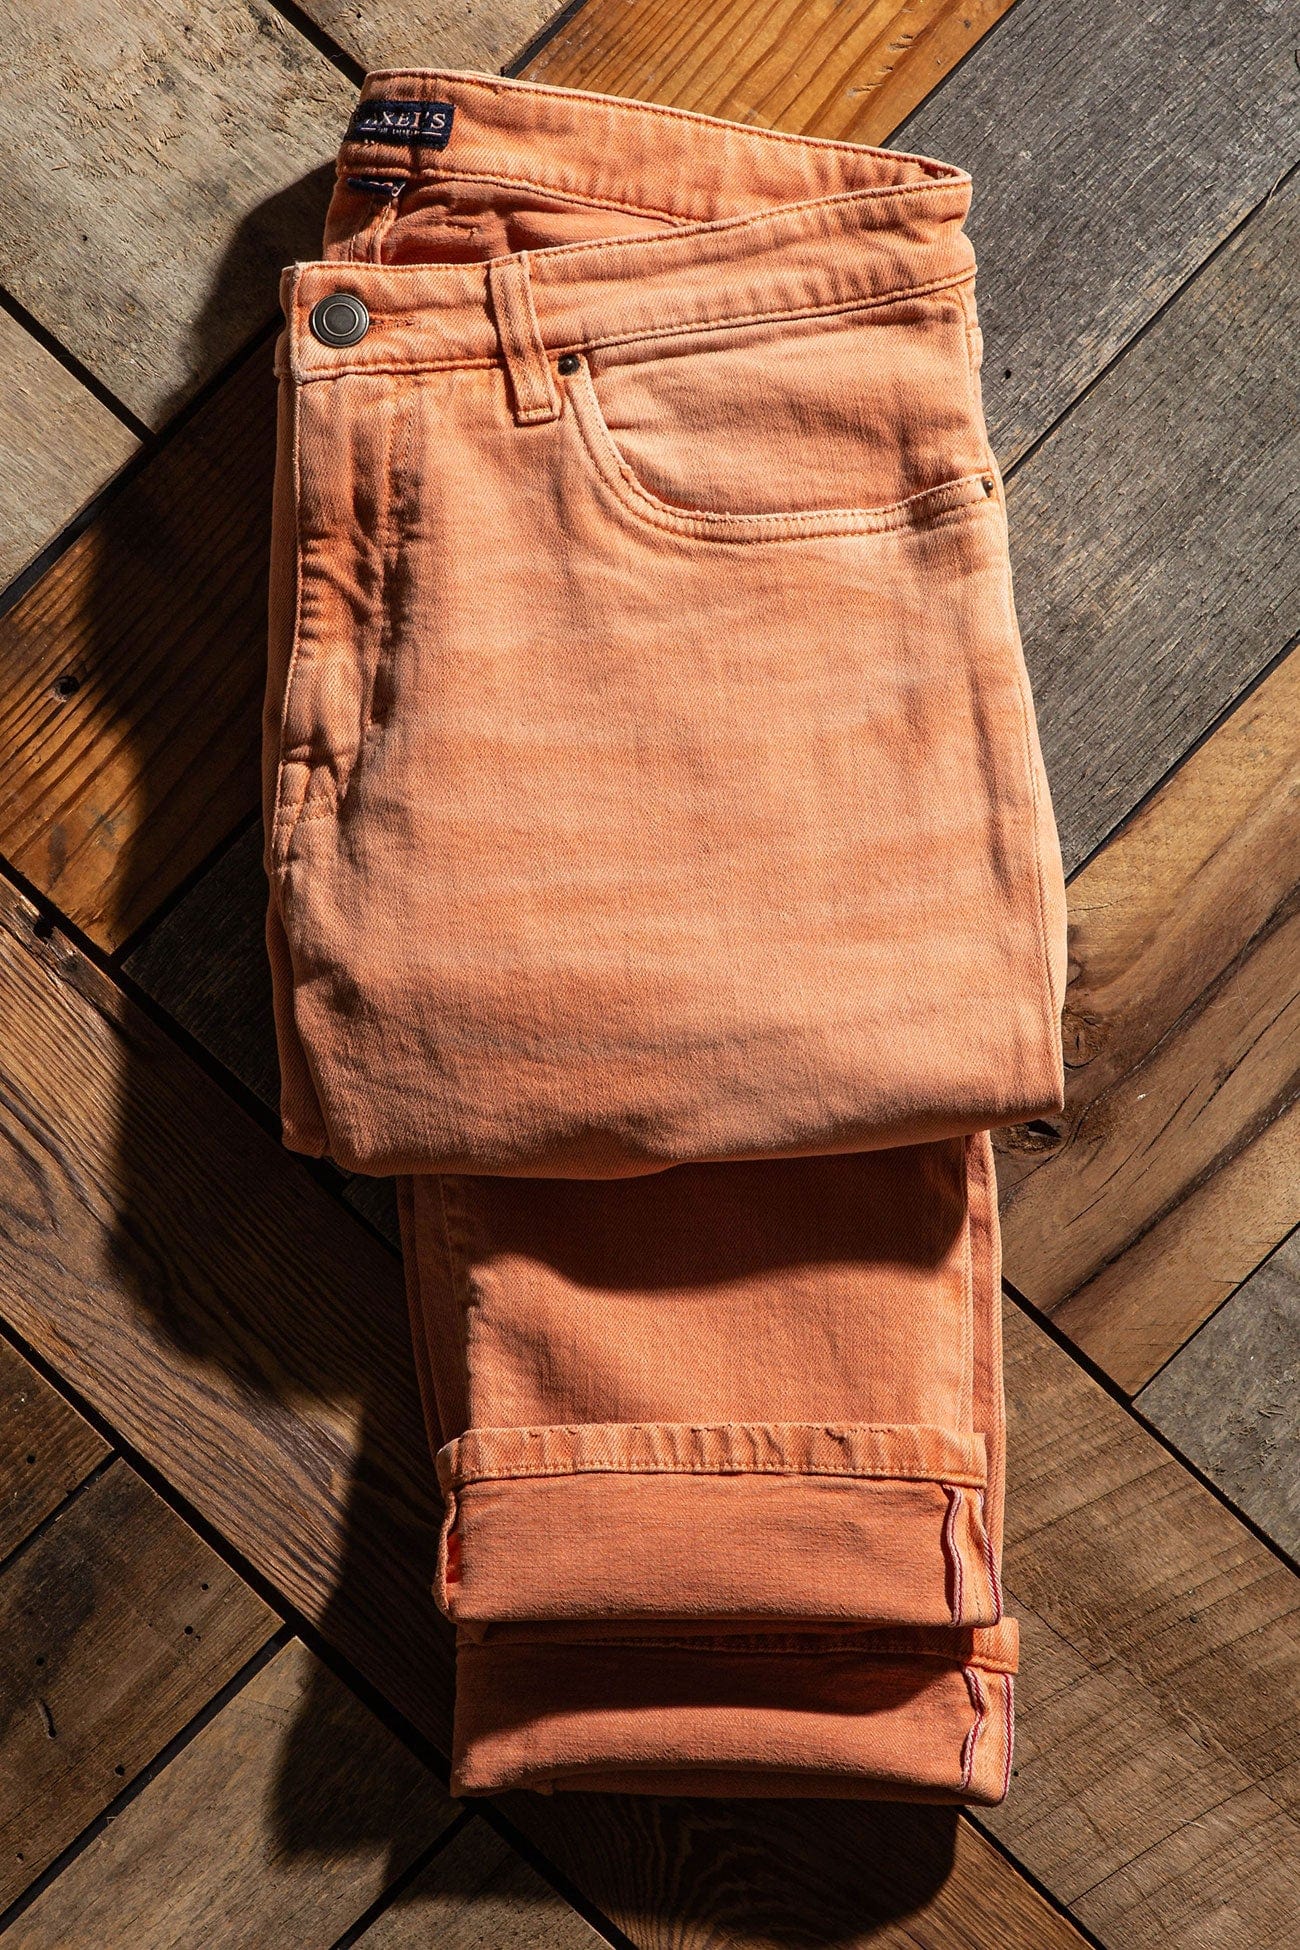 Axels Premium Denim Tucson Selvedge Denim In Arancio Mens - Pants - 5 Pocket